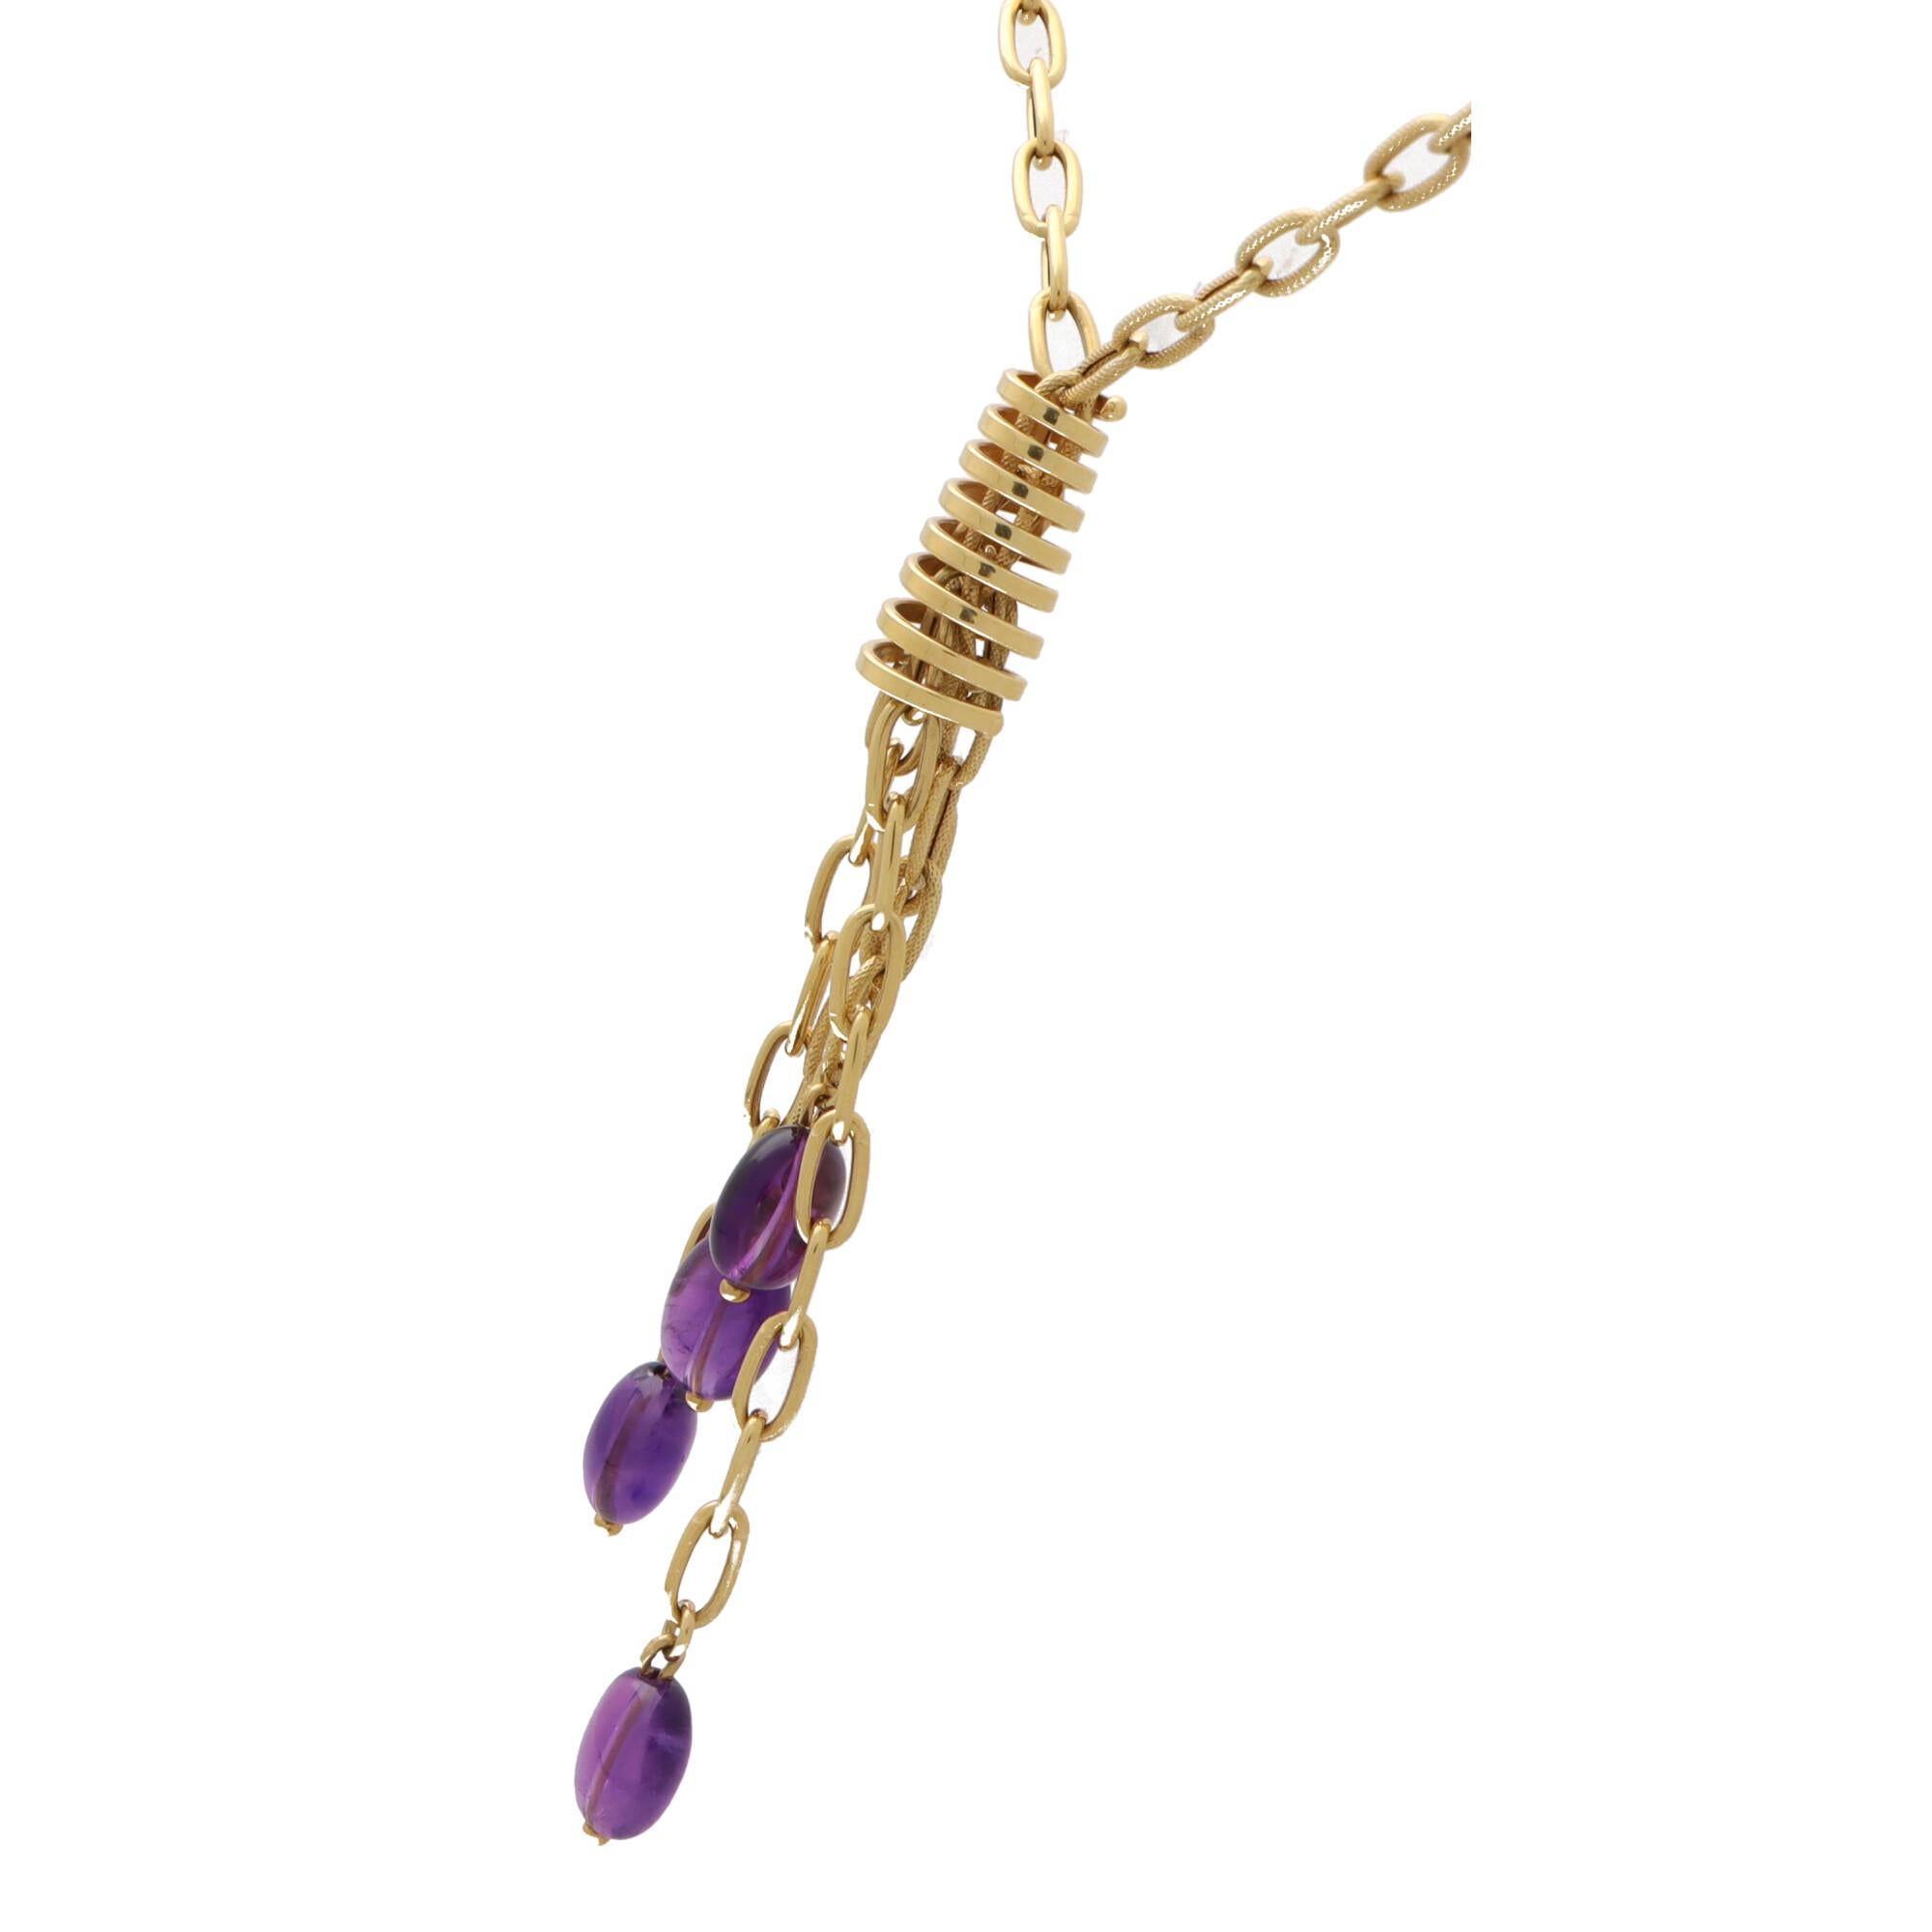 Vintage Italian Amethyst Chain Link Tassel Necklace Set in 18k Yellow Gold 1